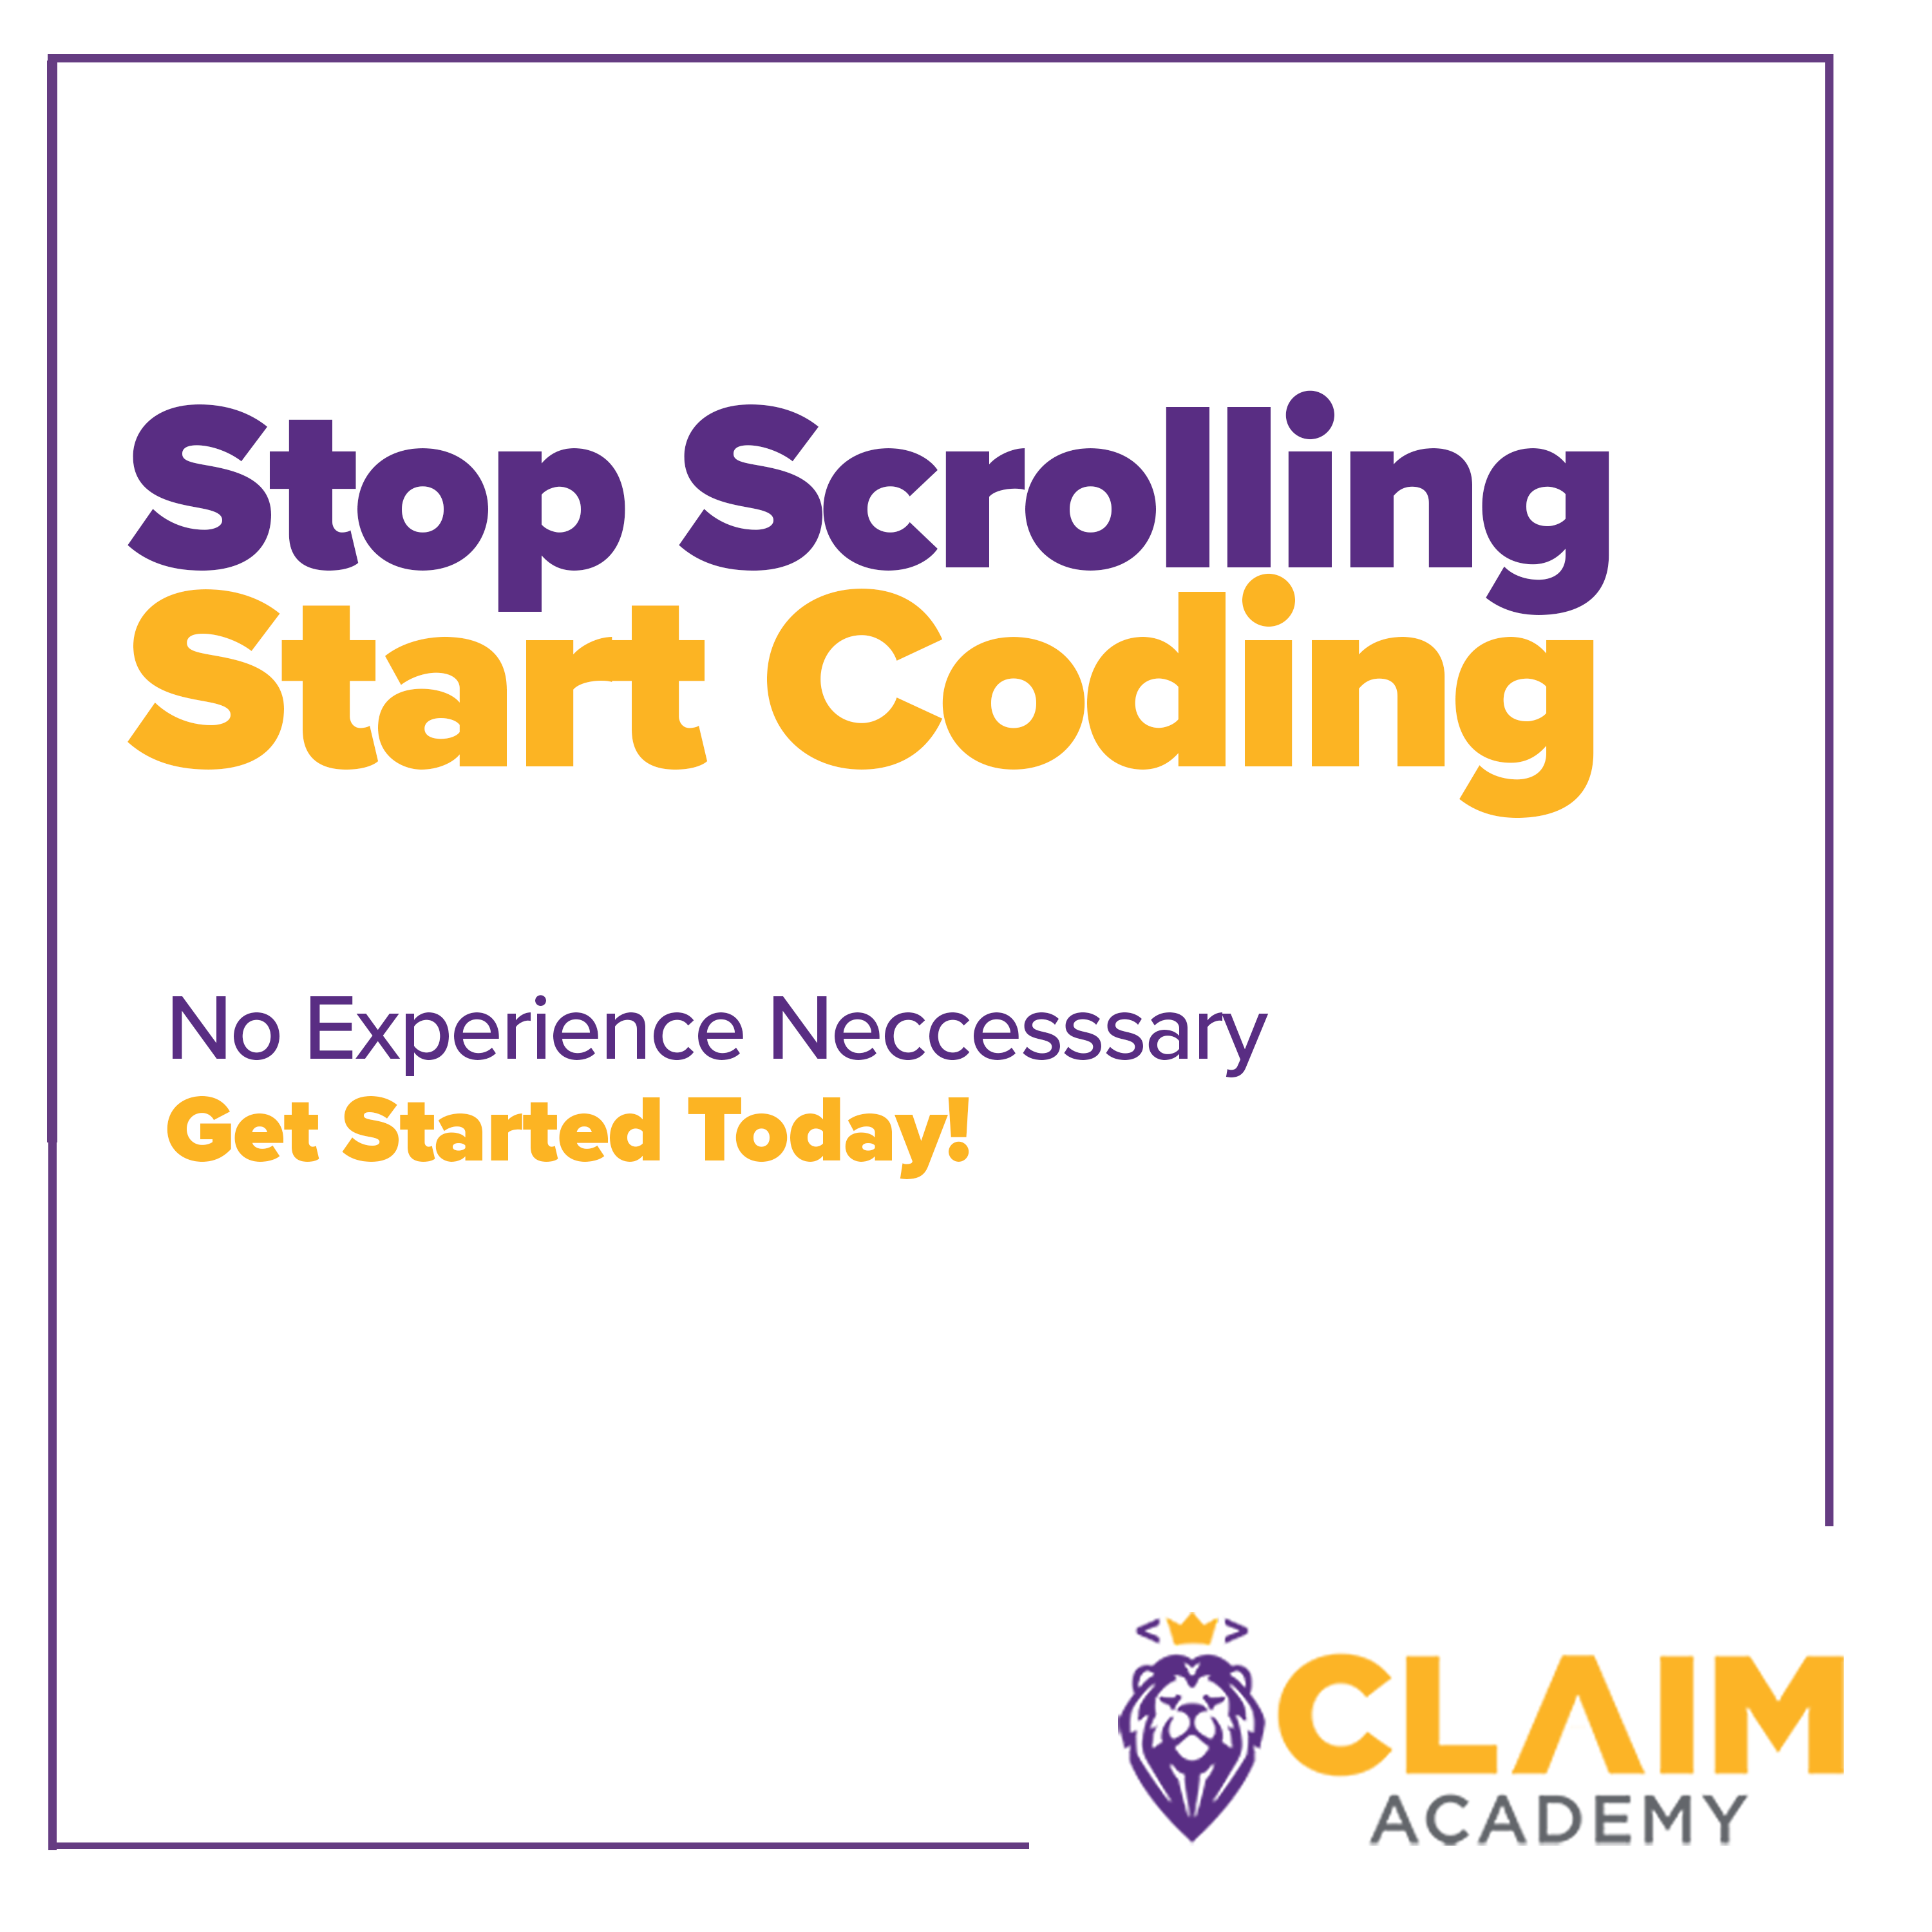 Start Coding